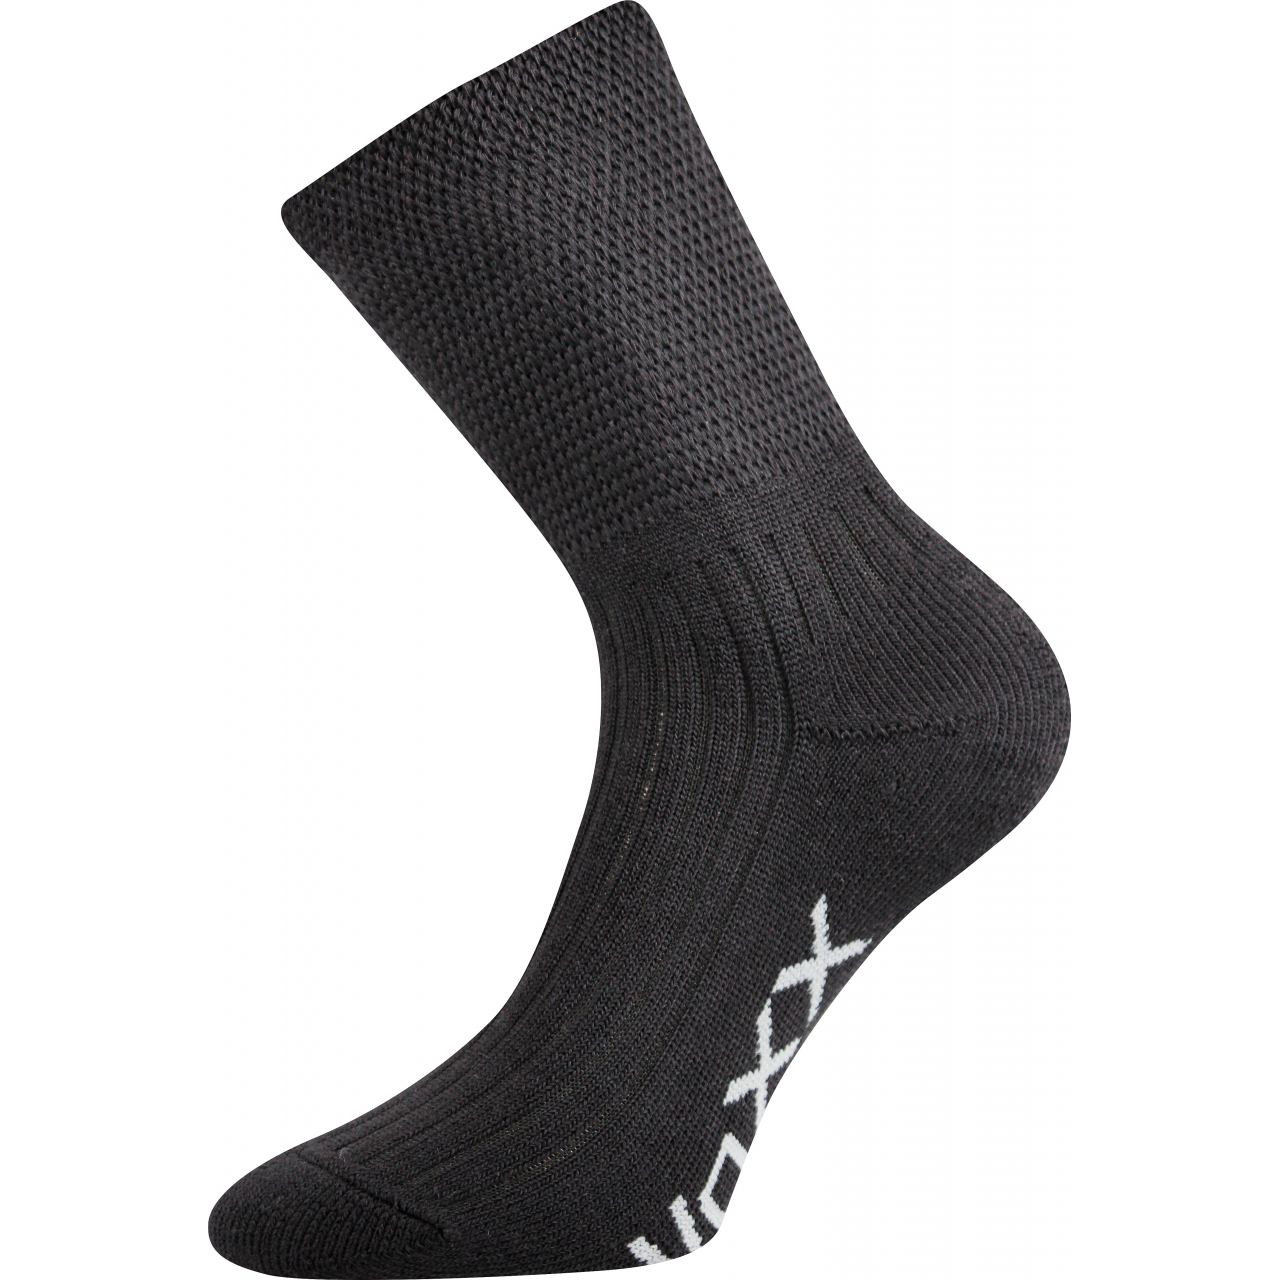 Ponožky unisex froté Voxx Stratos - černé, 43-46